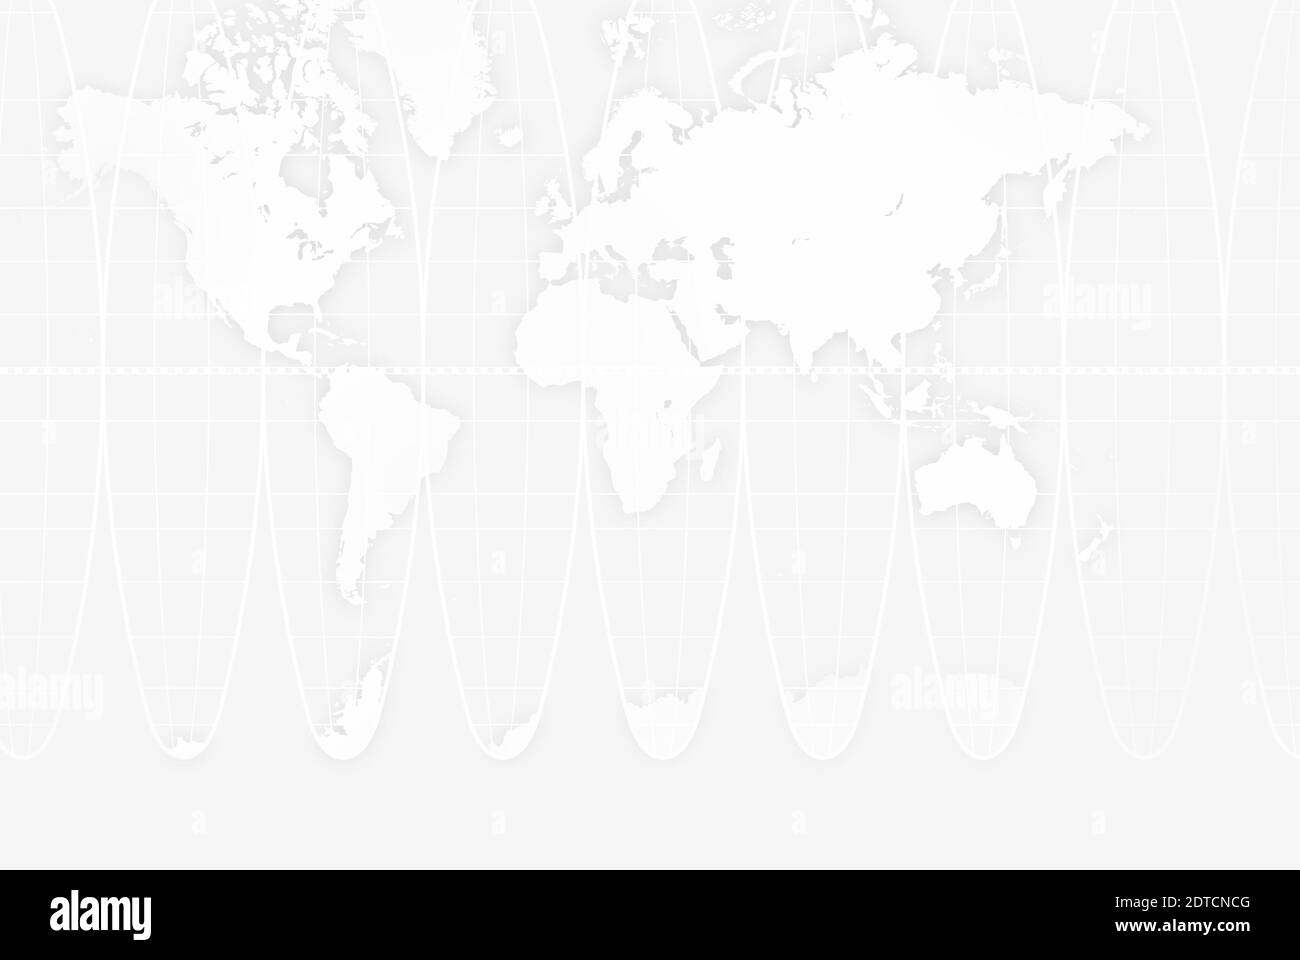 White world map Stock Photo